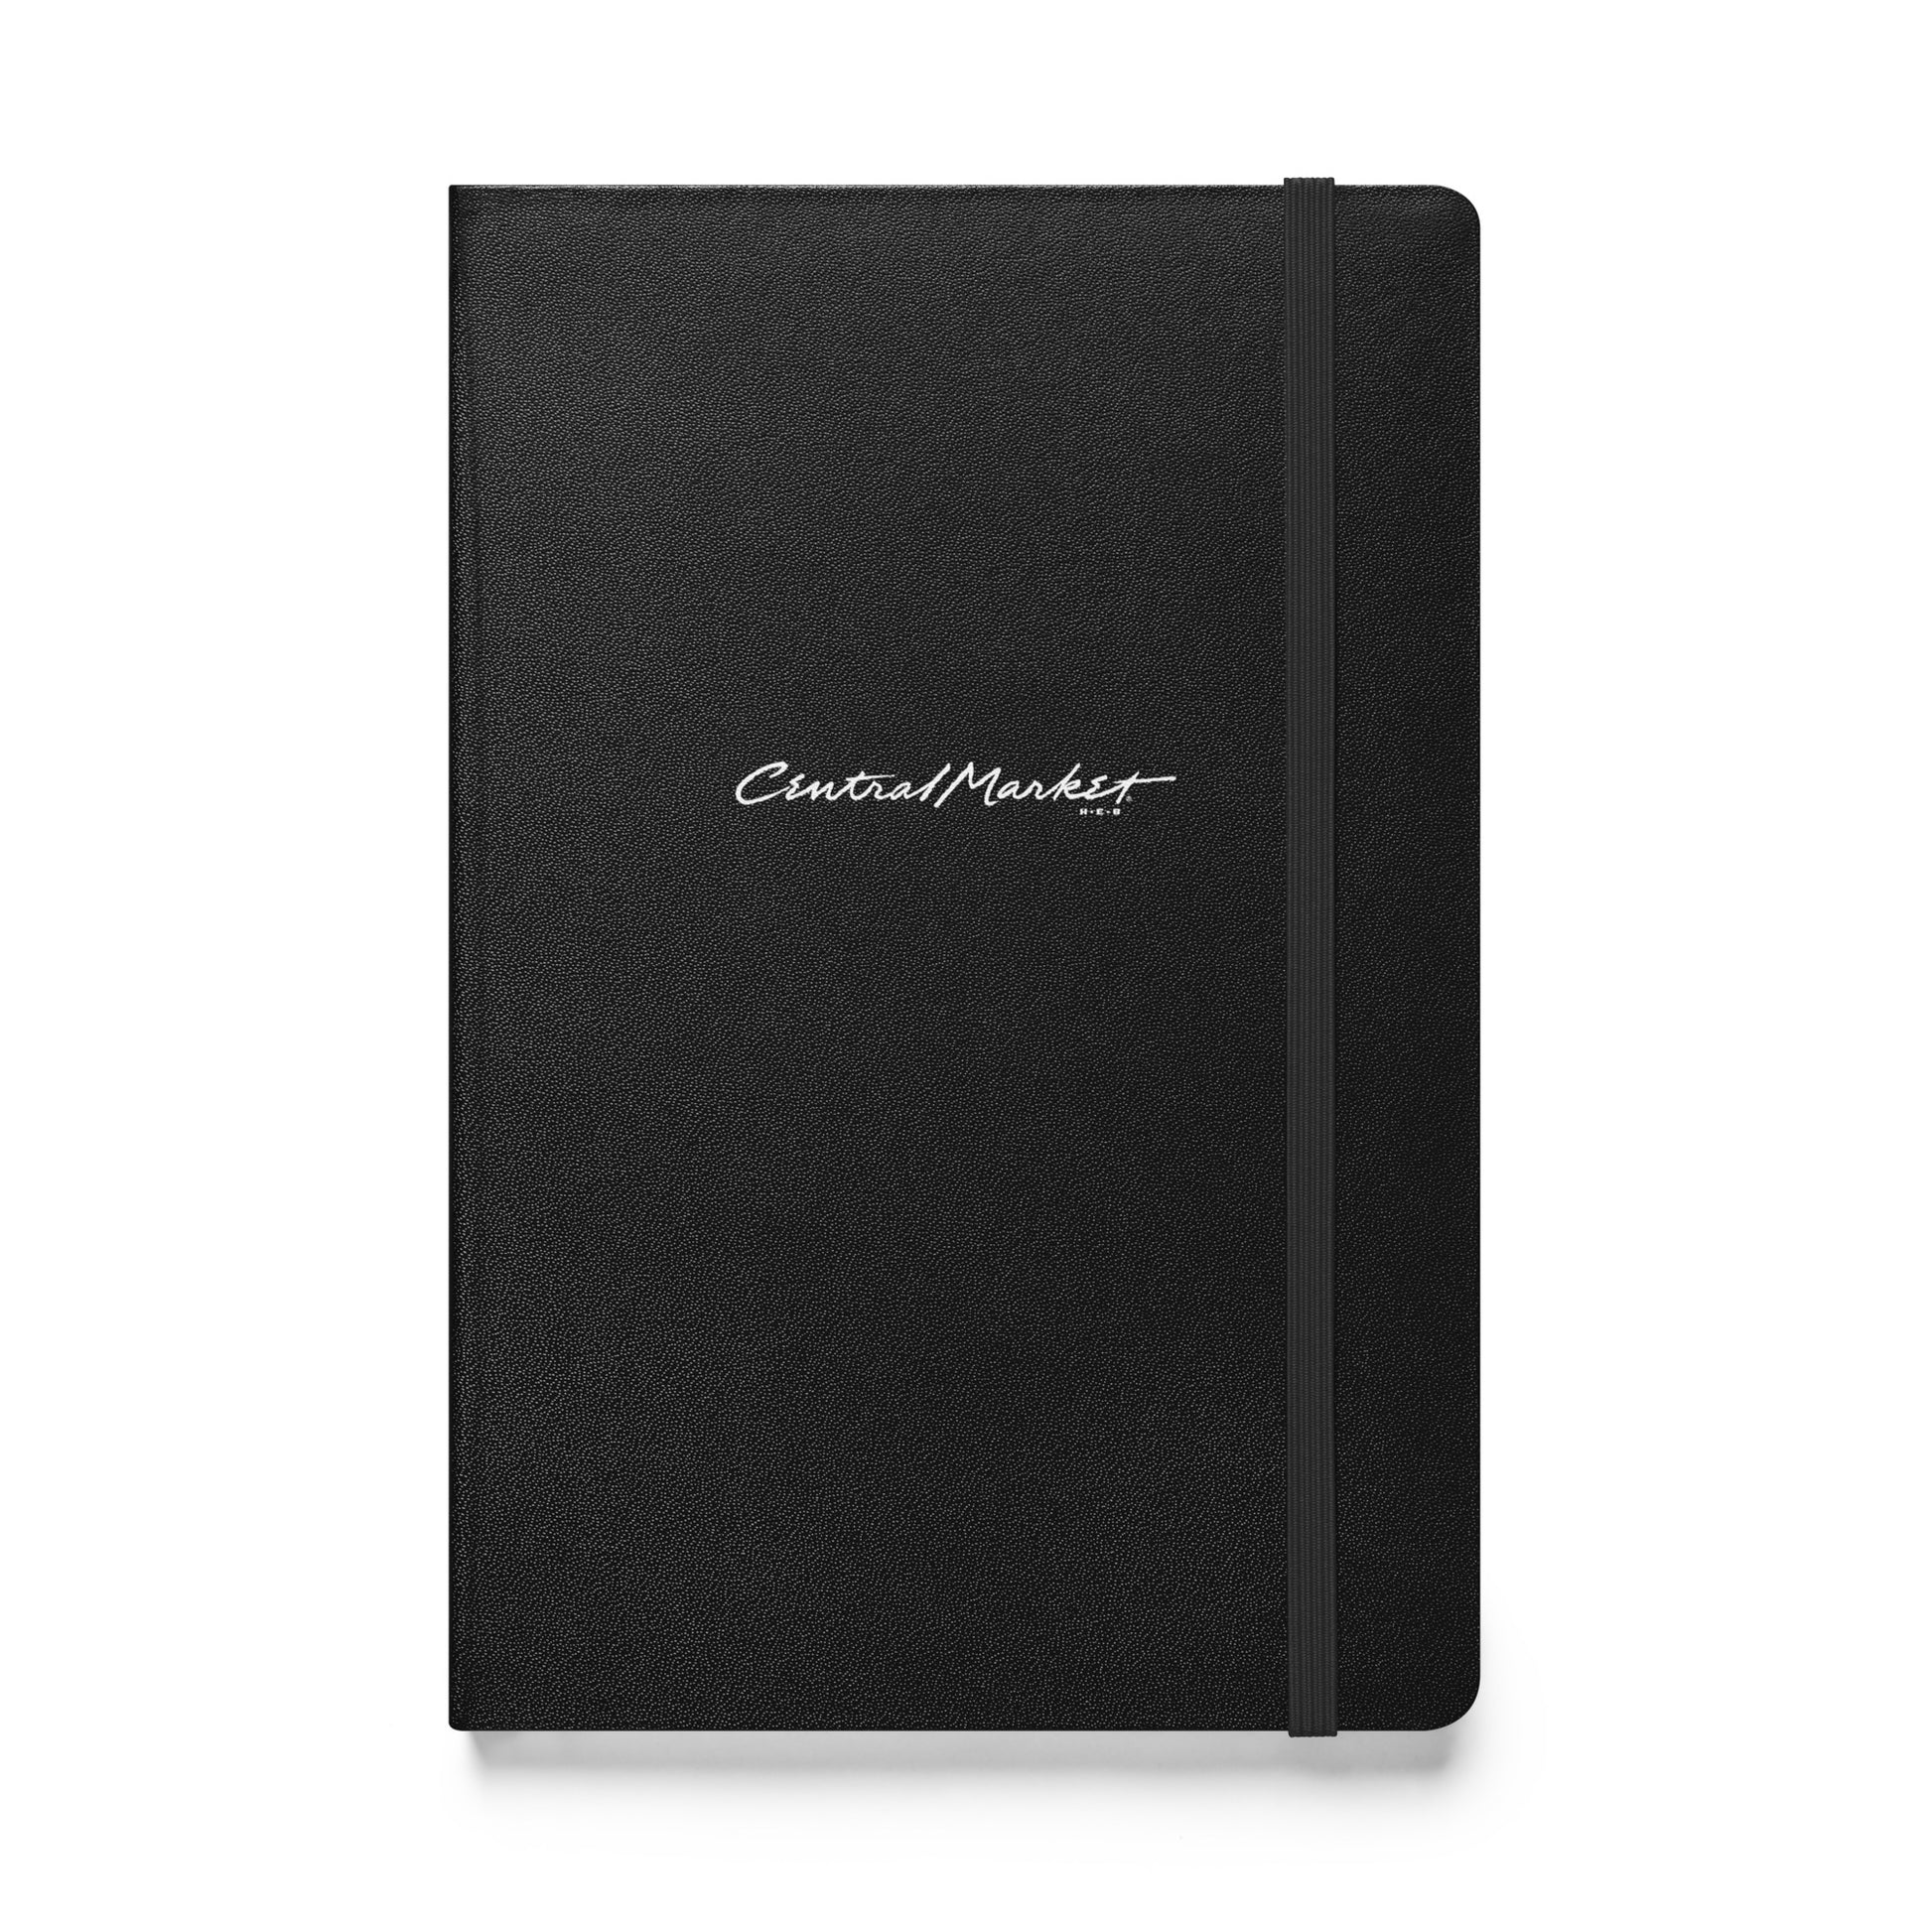 Central Market Hardcover bound notebook CedarHill Country Market